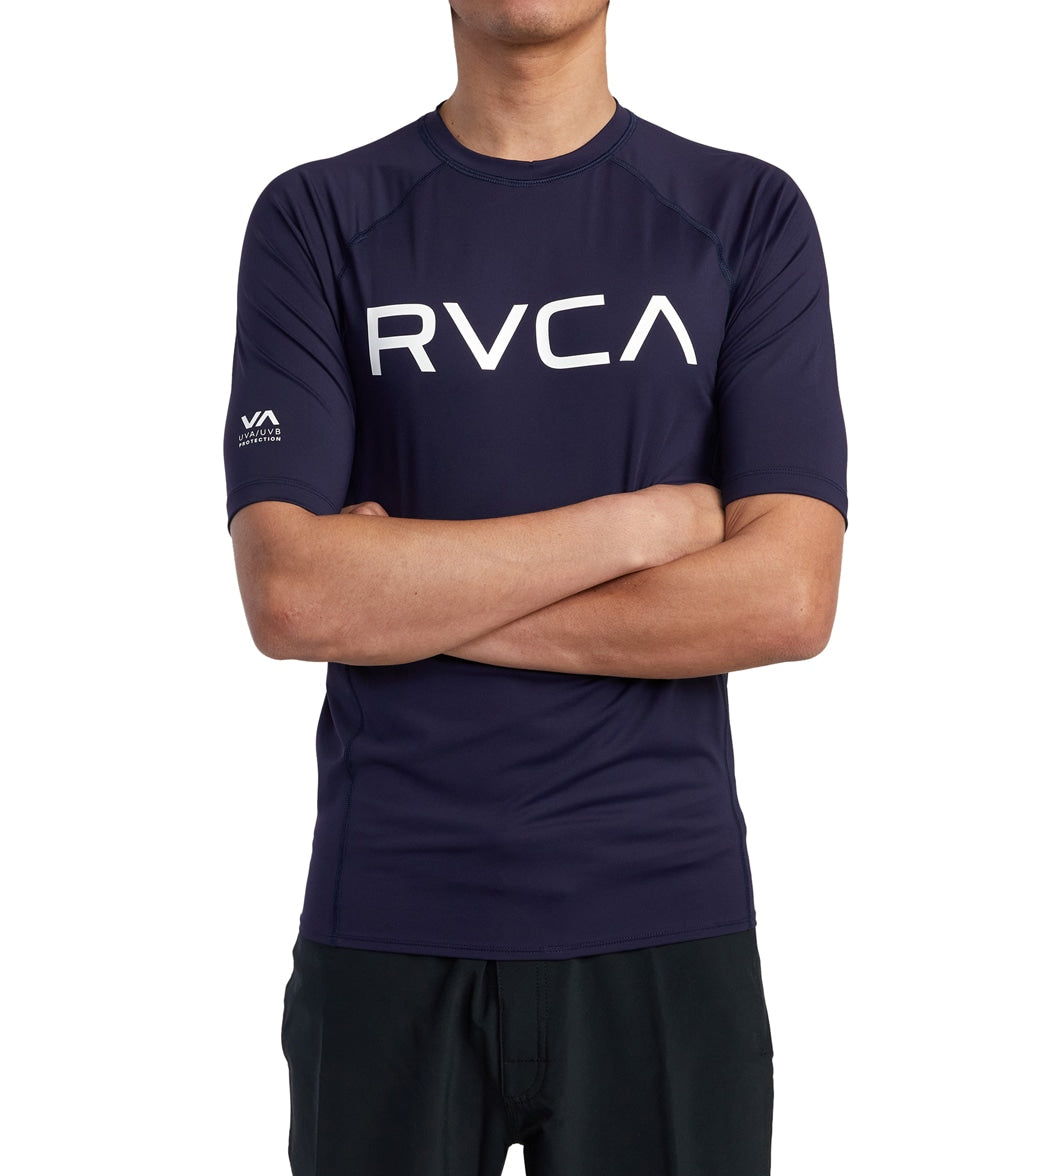 RVCA Mens Rvca Short Sleeve Rashguard